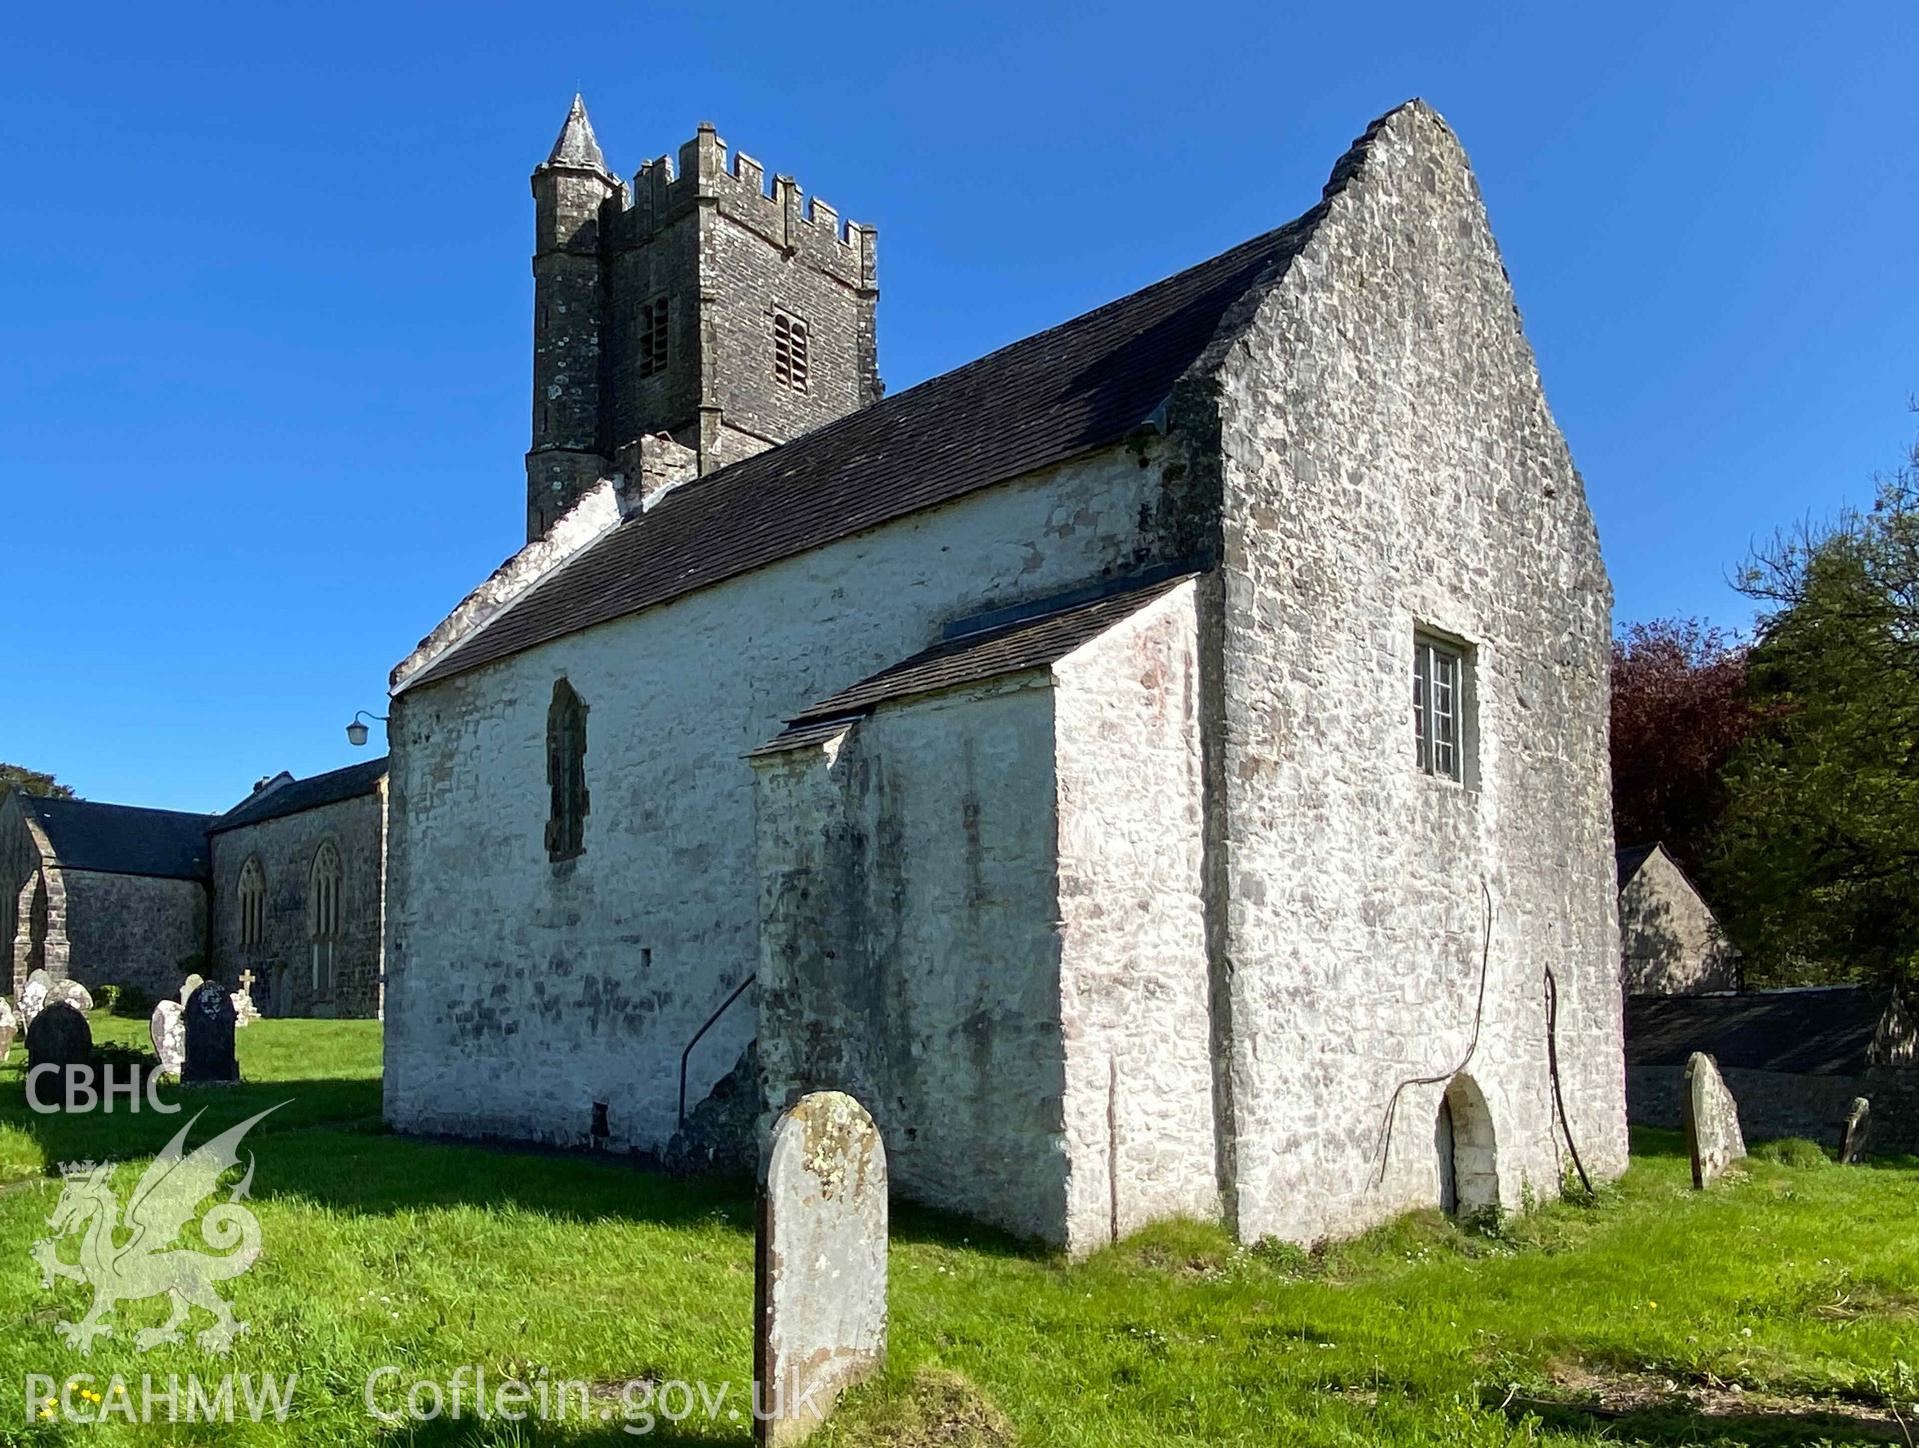 Digital photograph of Carew Cheriton Mortuary Chapel, produced by Paul Davis in 2023